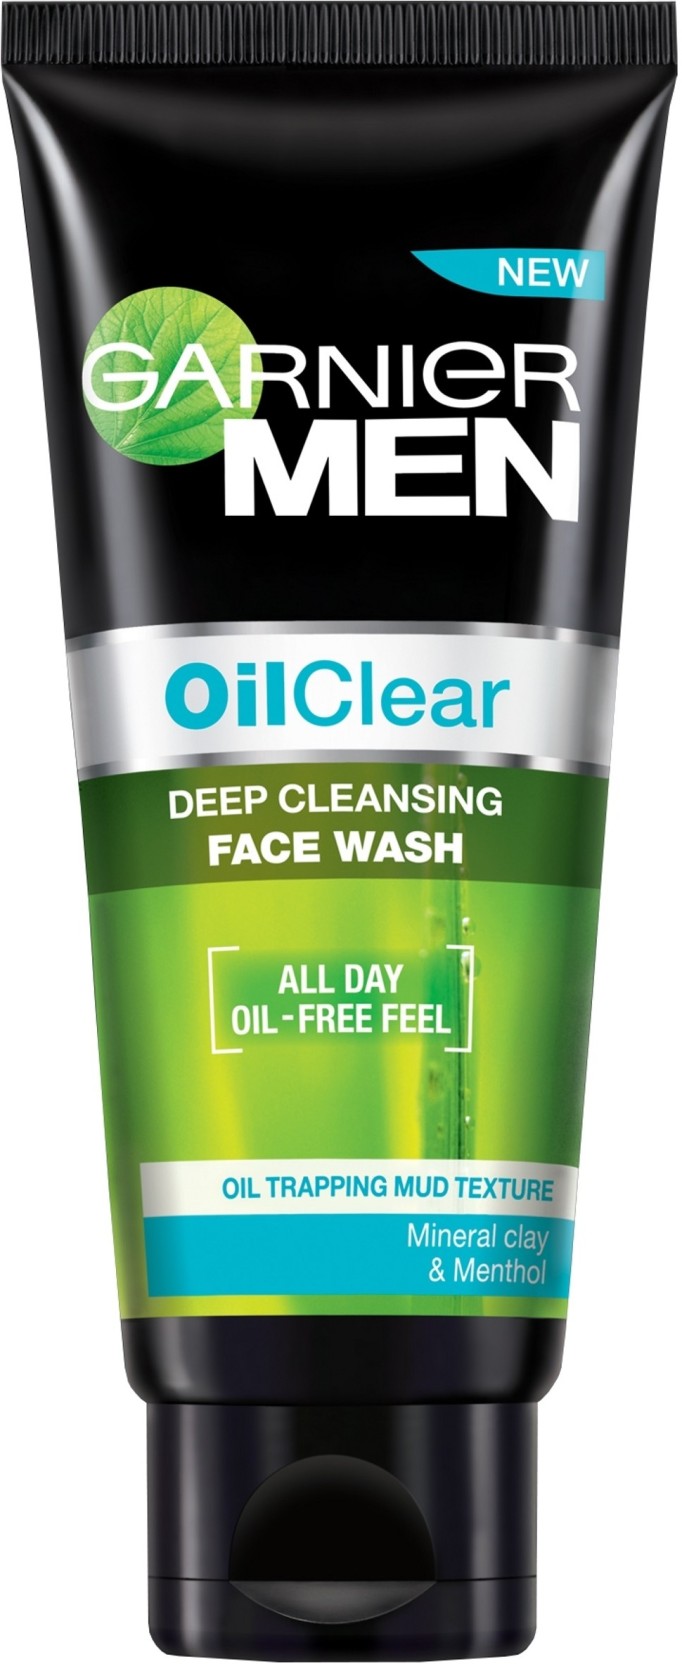 Garnier Men Oil Clear Deep Cleansing Face Wash - Price in ...